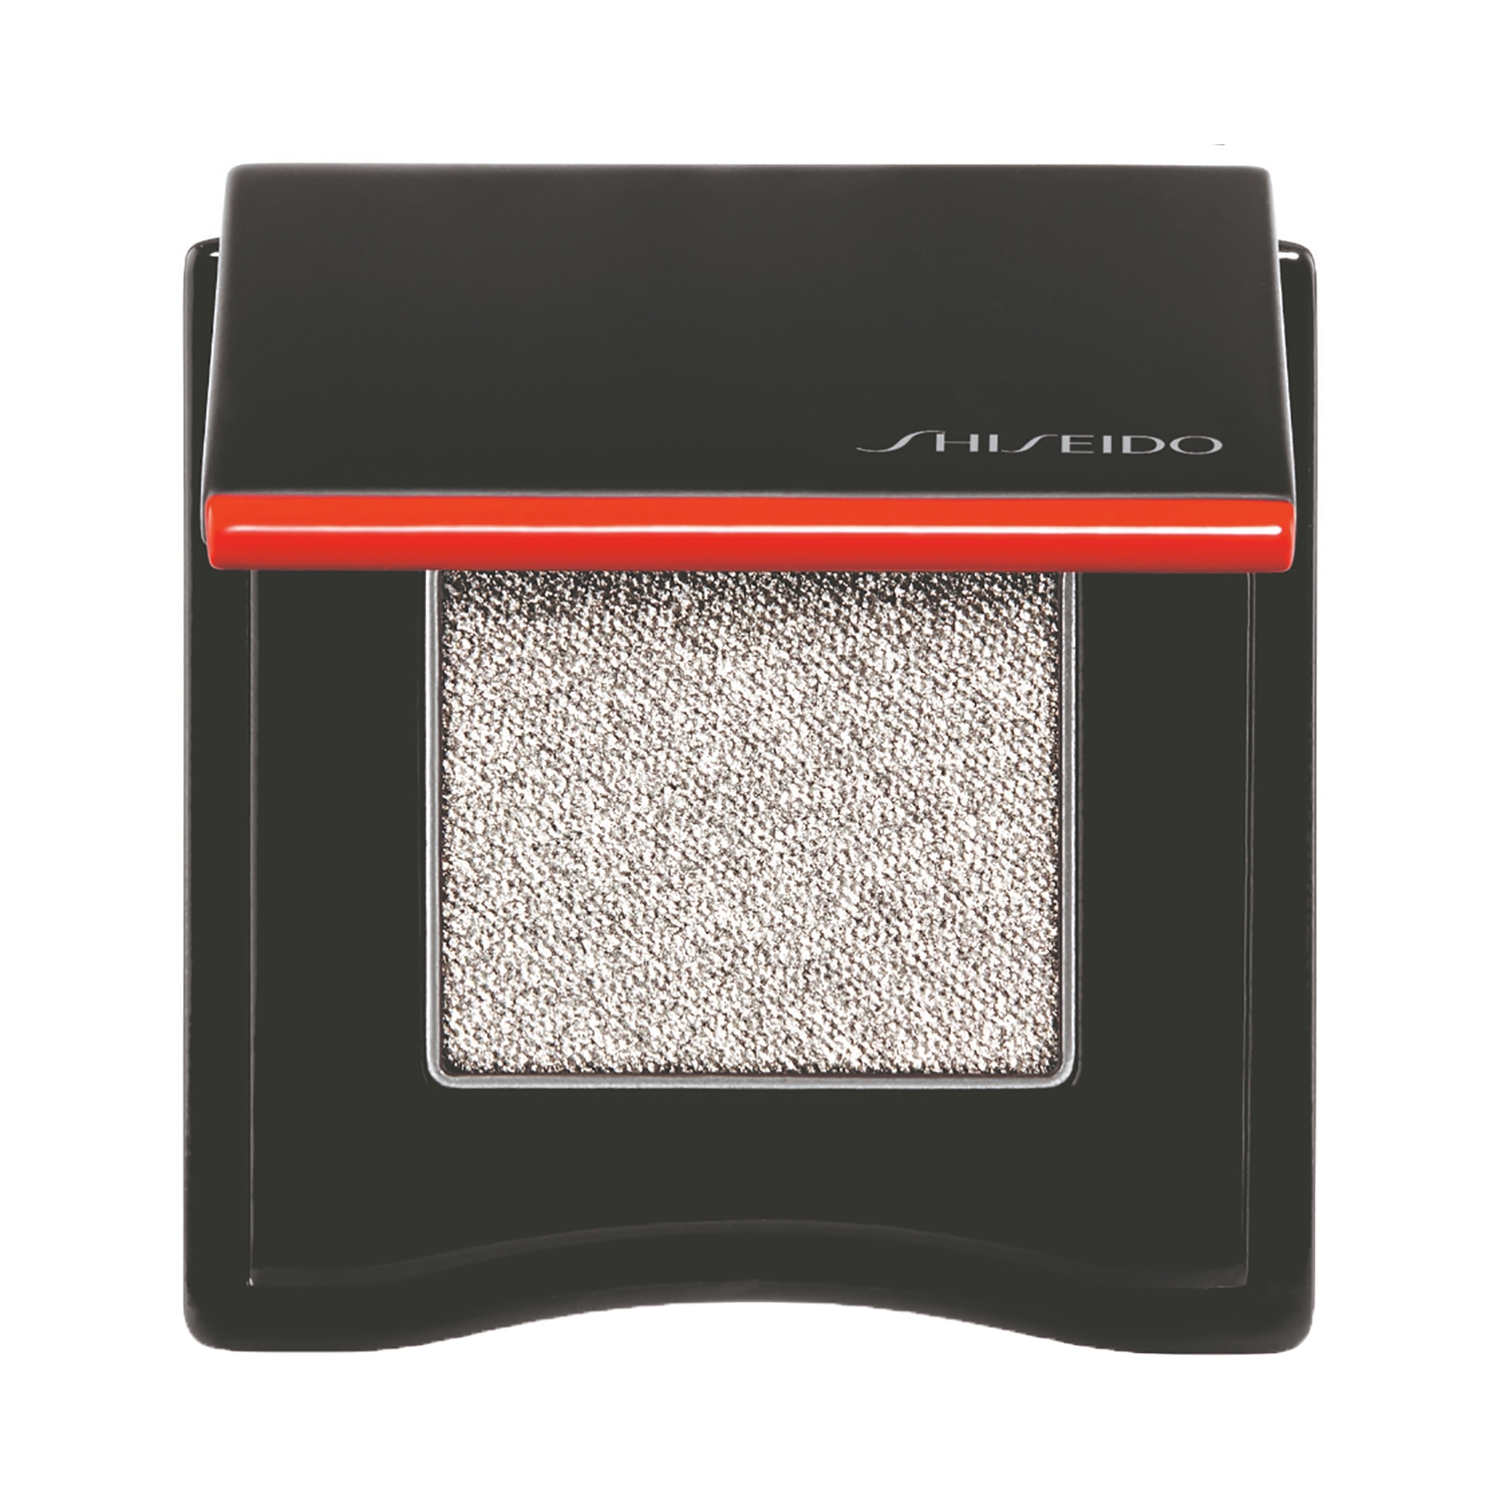 Shiseido | Shiseido Pop Powdergel Eye Shadow - 07 Shari Silver (2.2g)